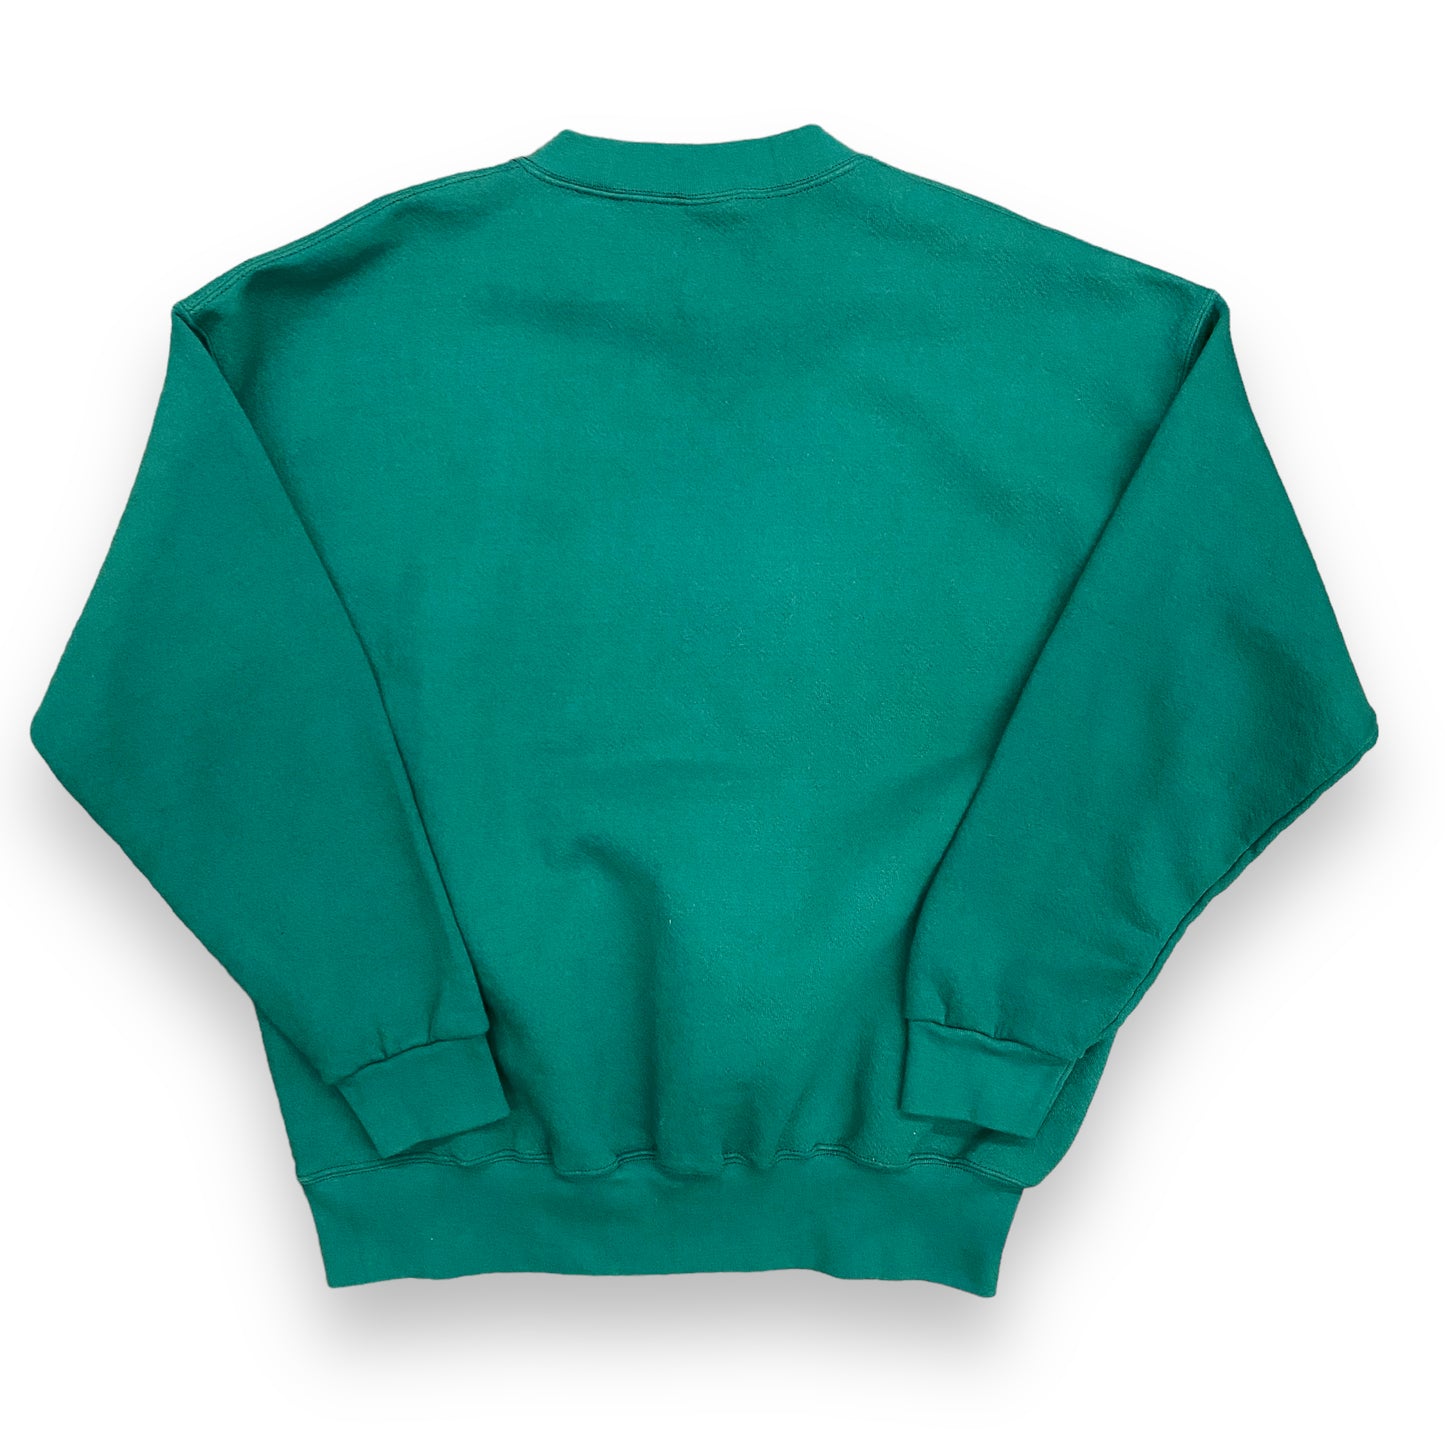 1996 USA Olympics Green Crewneck Sweatshirt - Size XL